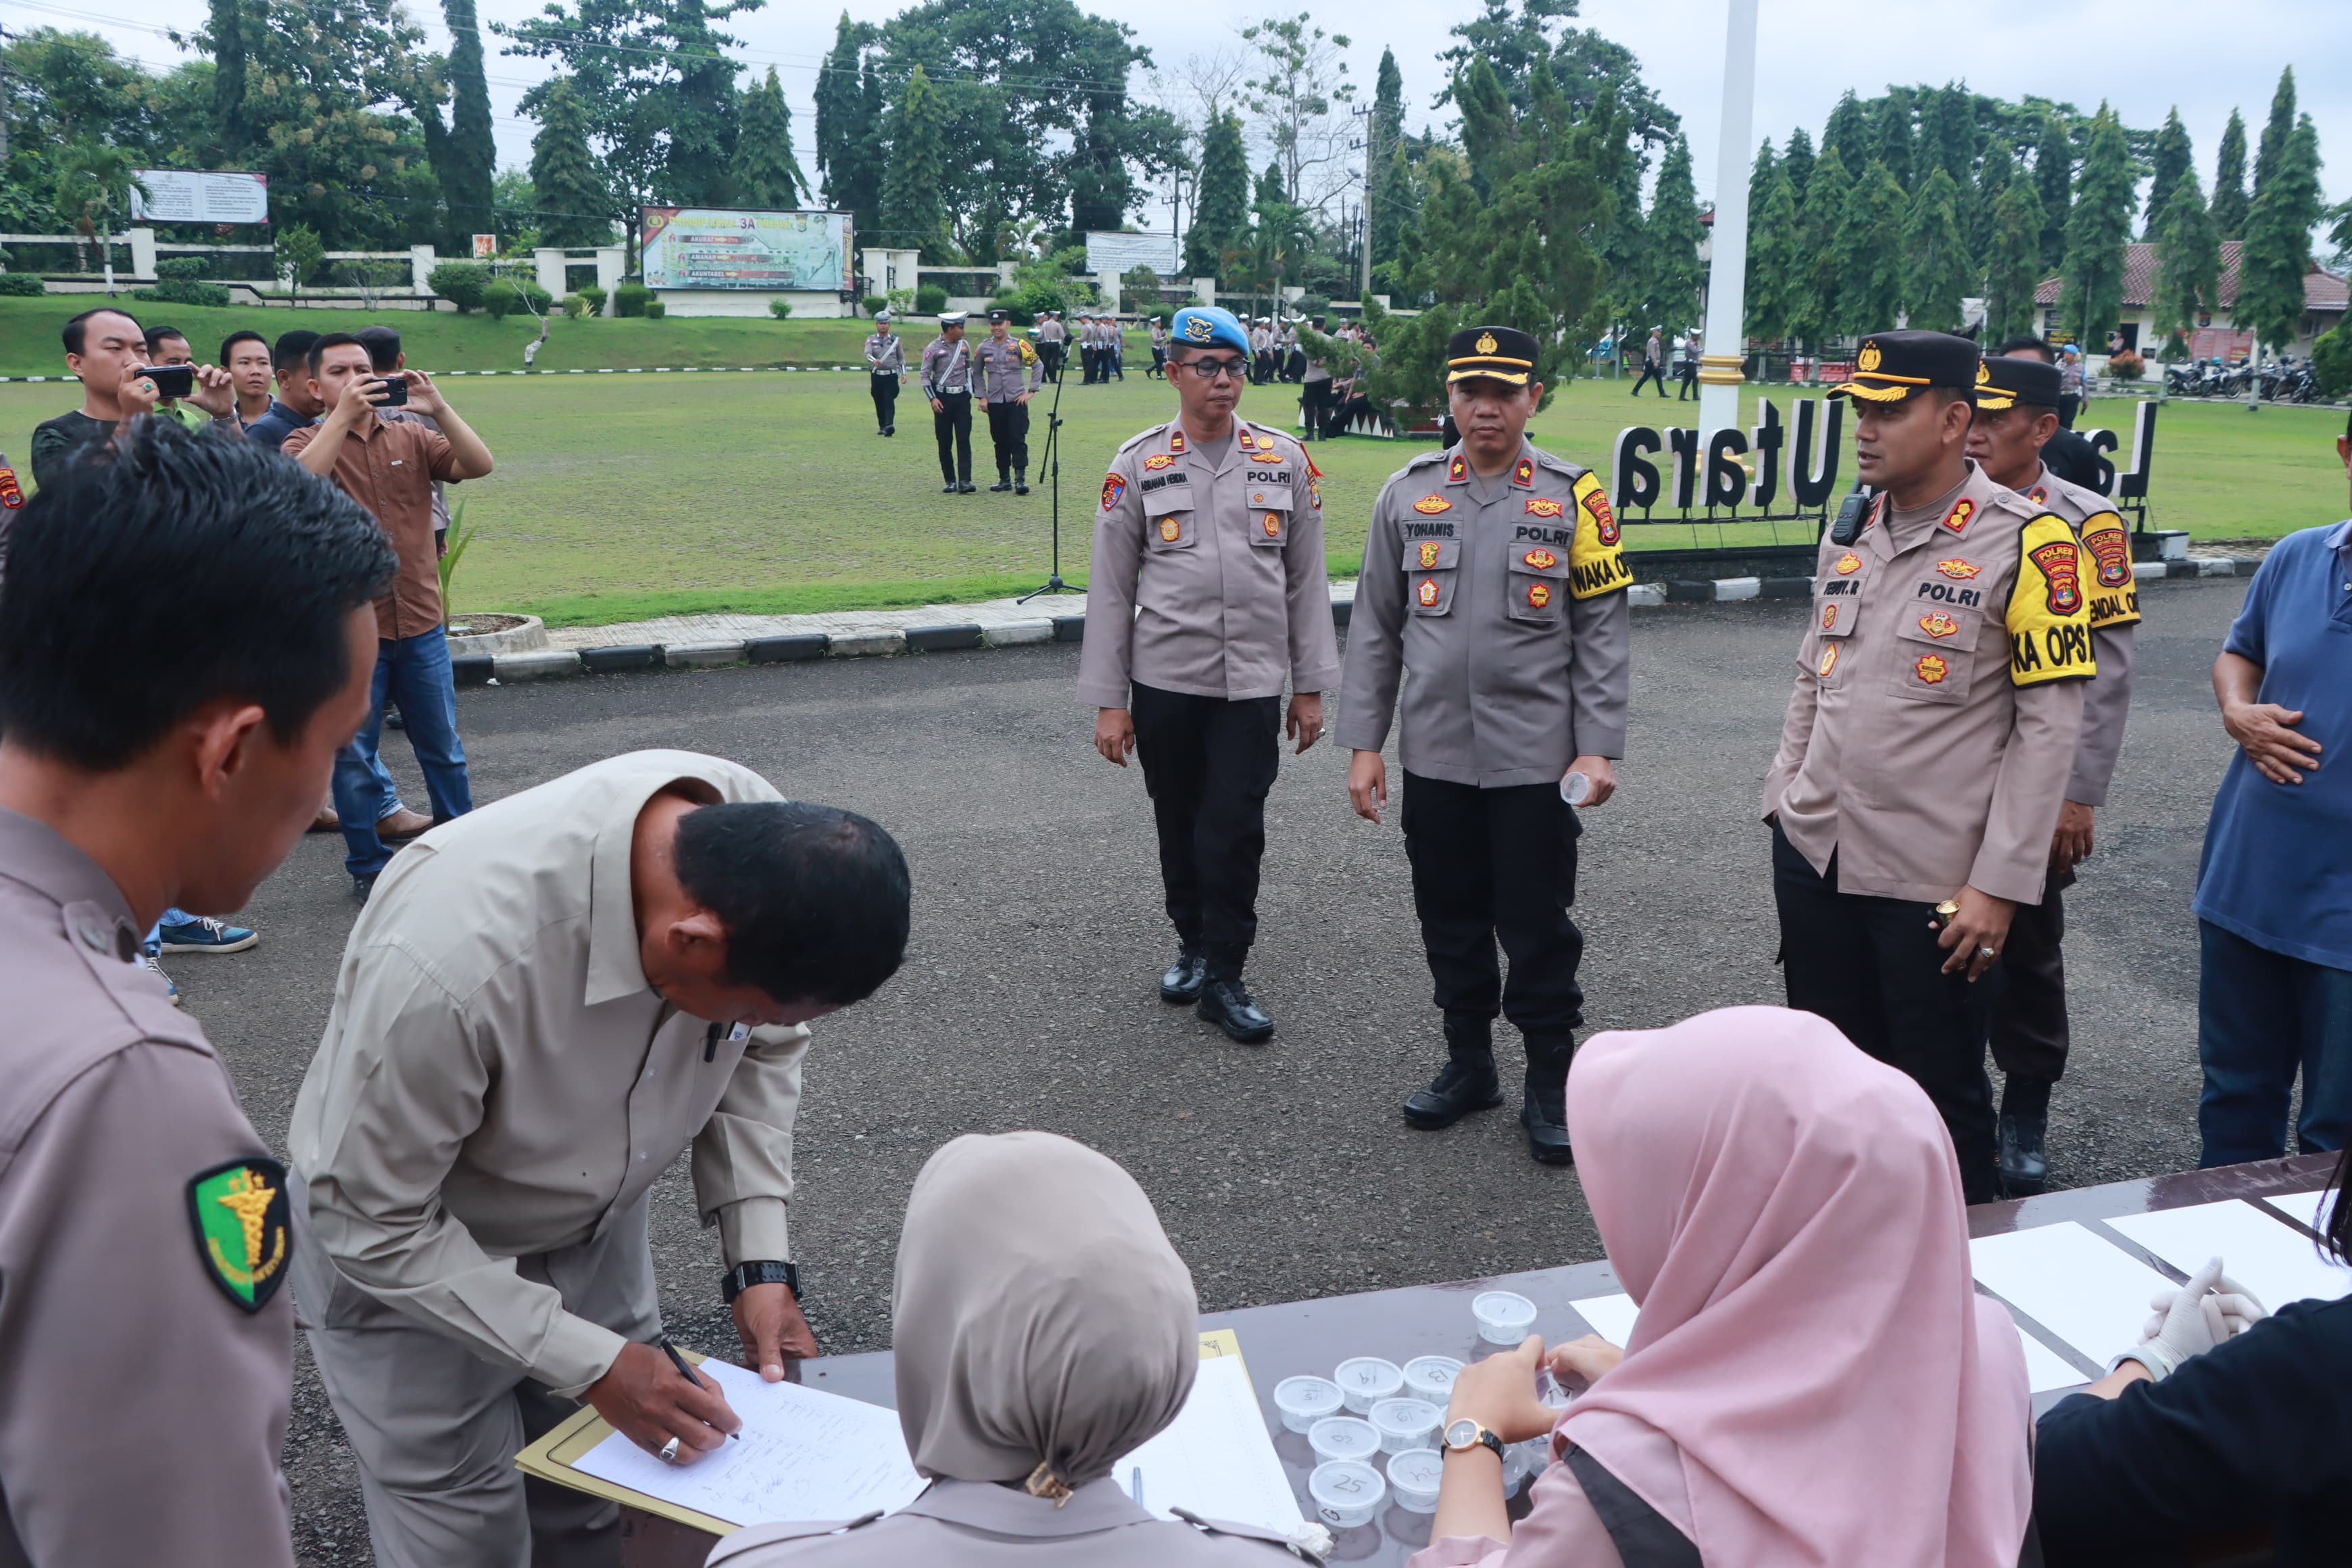 Waduh, Personel Polres Lampung Utara mendadak di tes urine